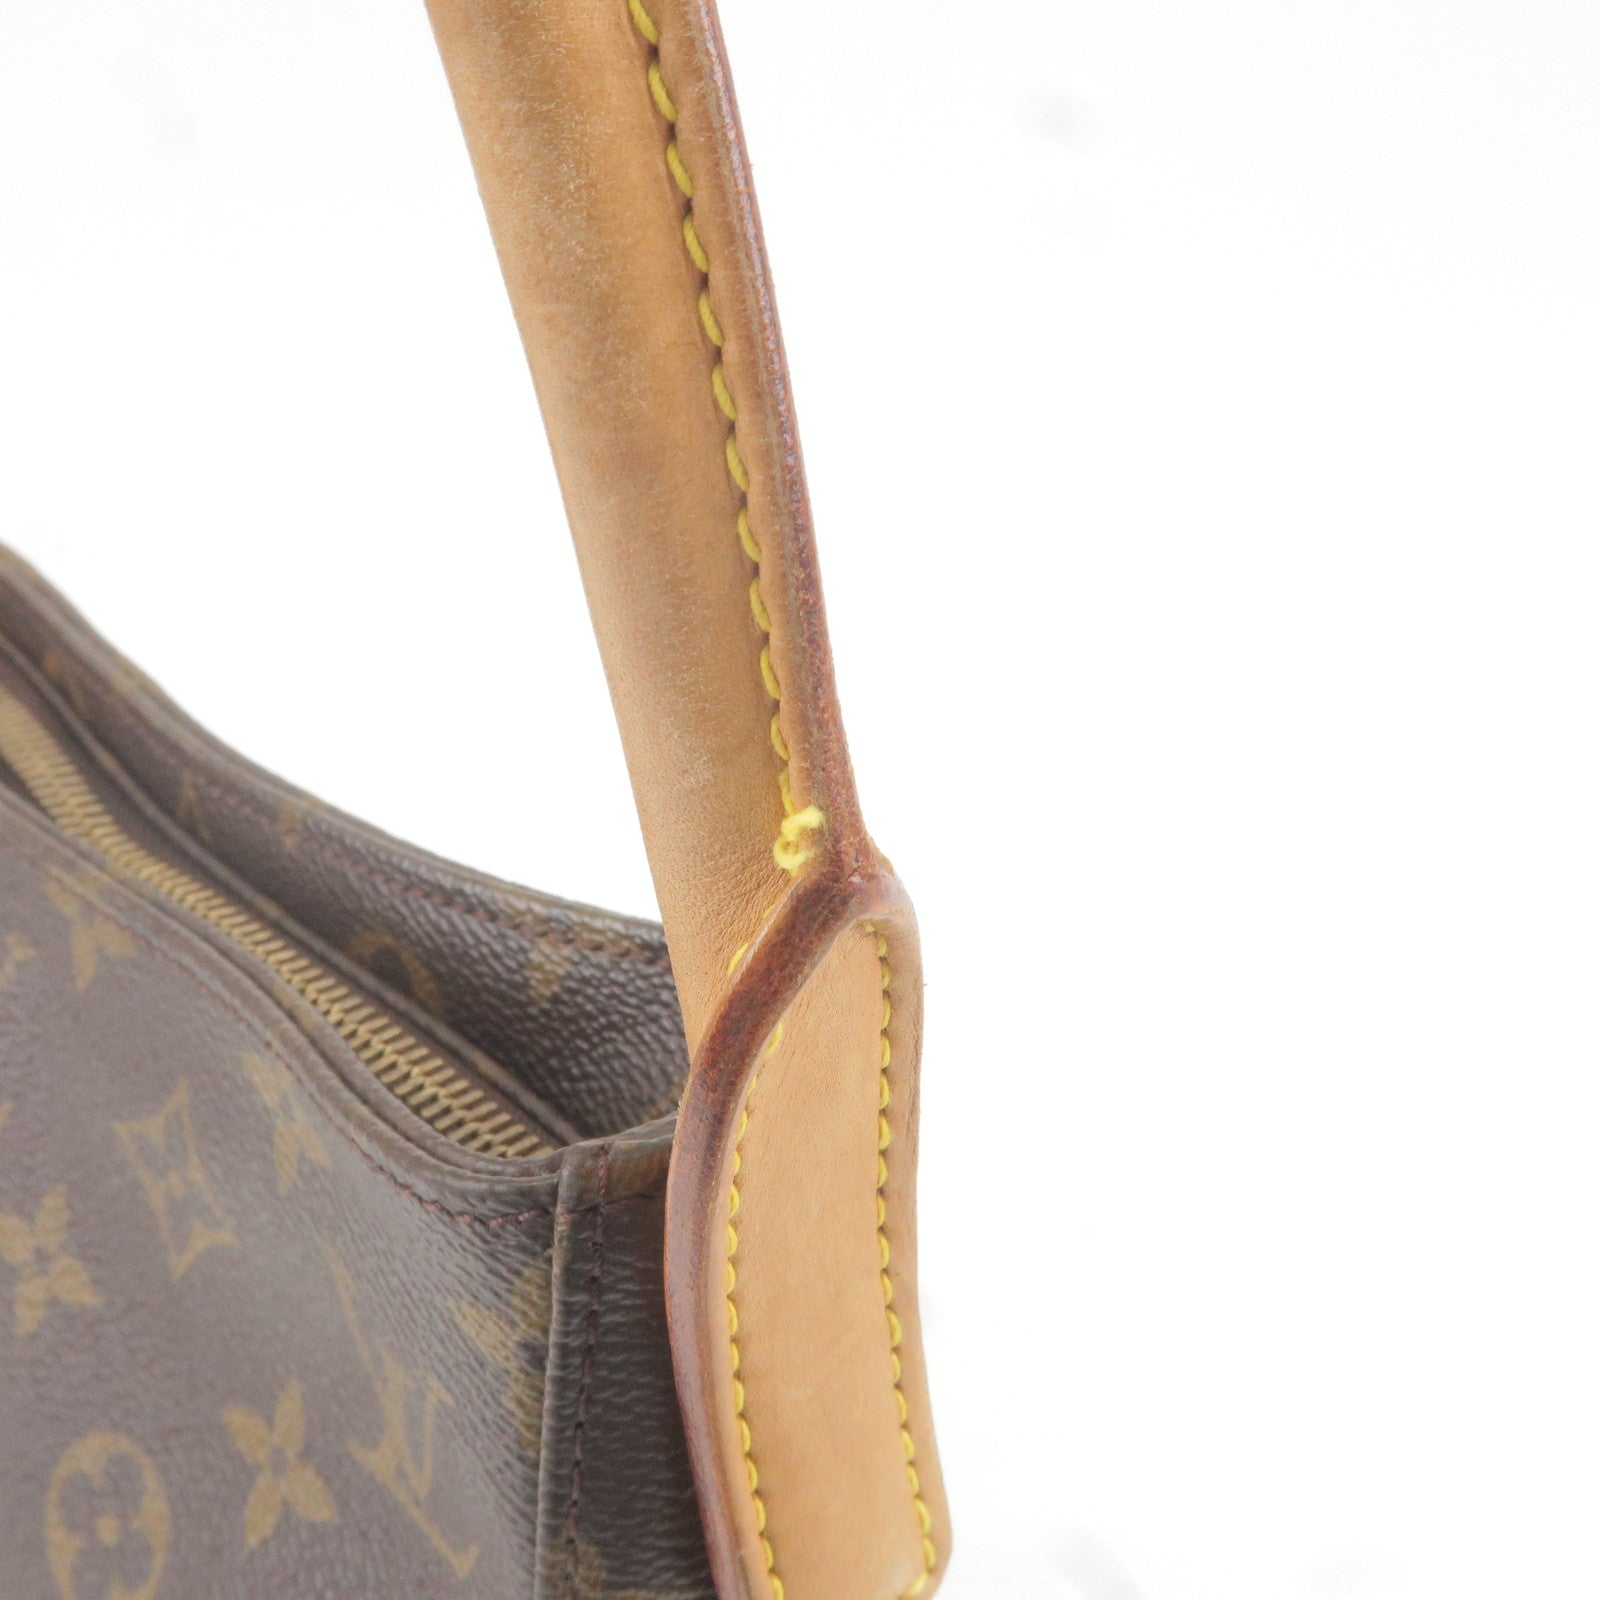 Louis Vuitton Monogram Monceau from 2000  Bags, Louis vuitton handbags, Louis  vuitton shoes